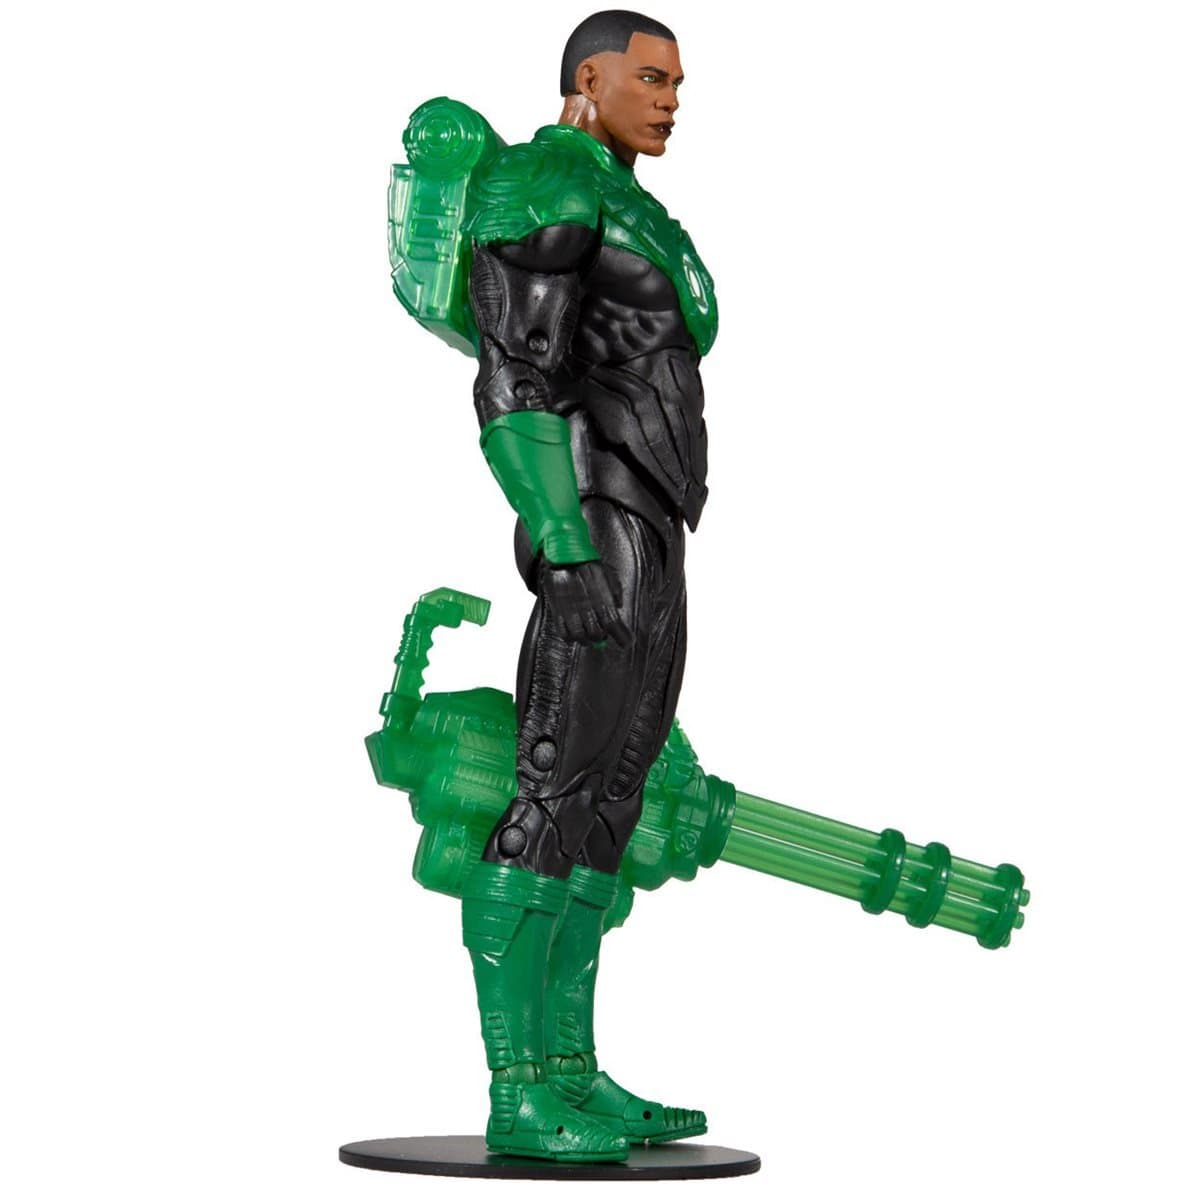 DC Multiverse John Stewart Modern Green Lantern 7-Inch Action Figure Pop-O-Loco